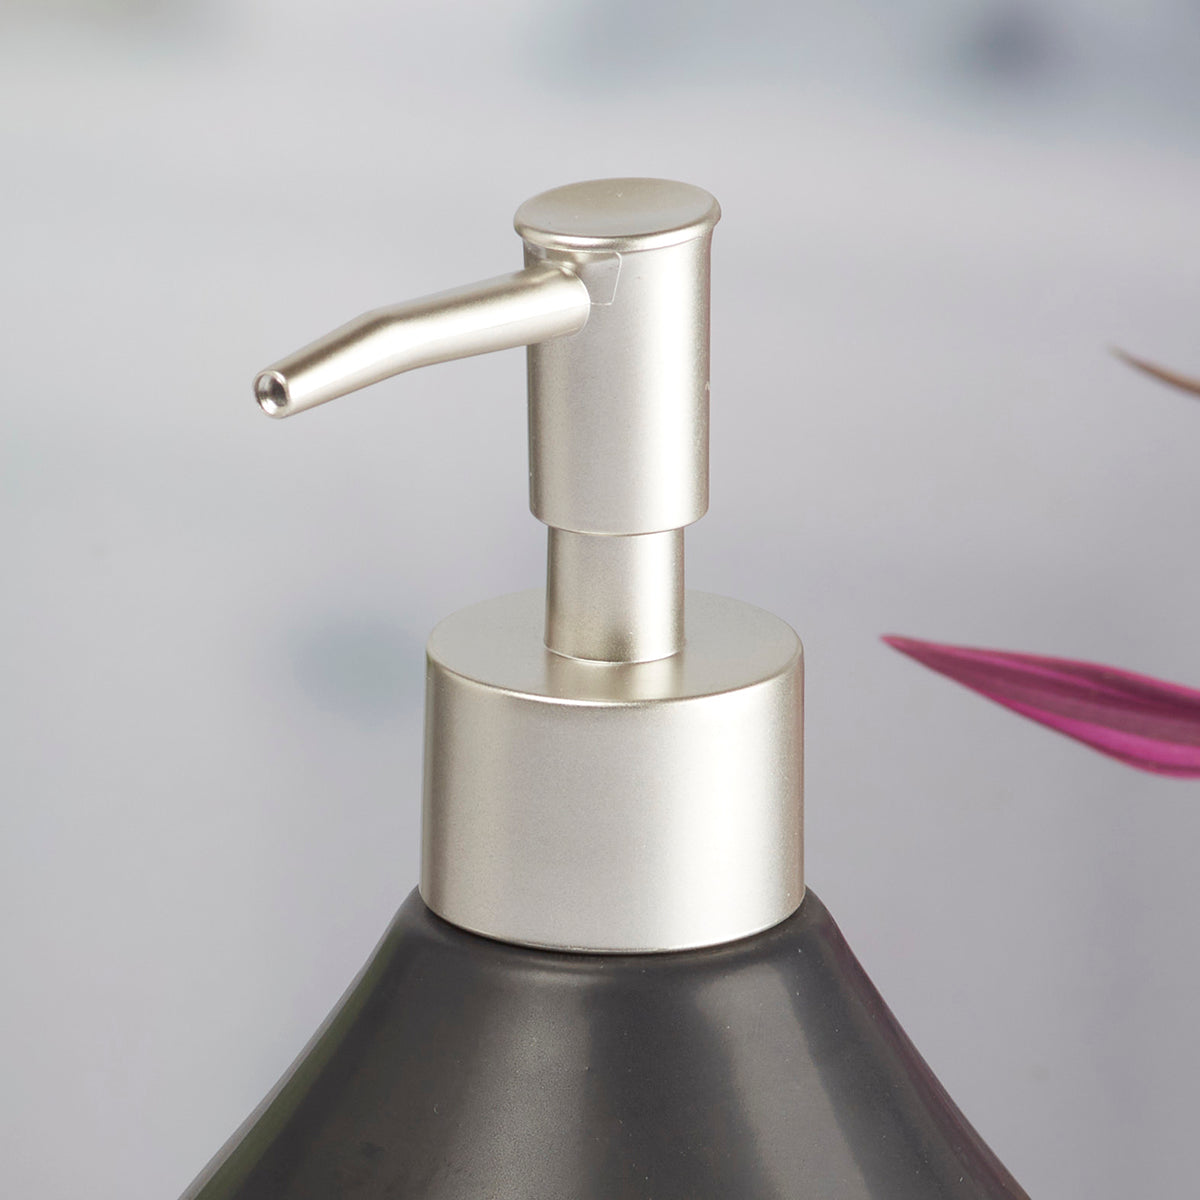 Ceramic Soap Dispenser Pump for Bathroom for Bath Gel, Lotion, Shampoo (8013)